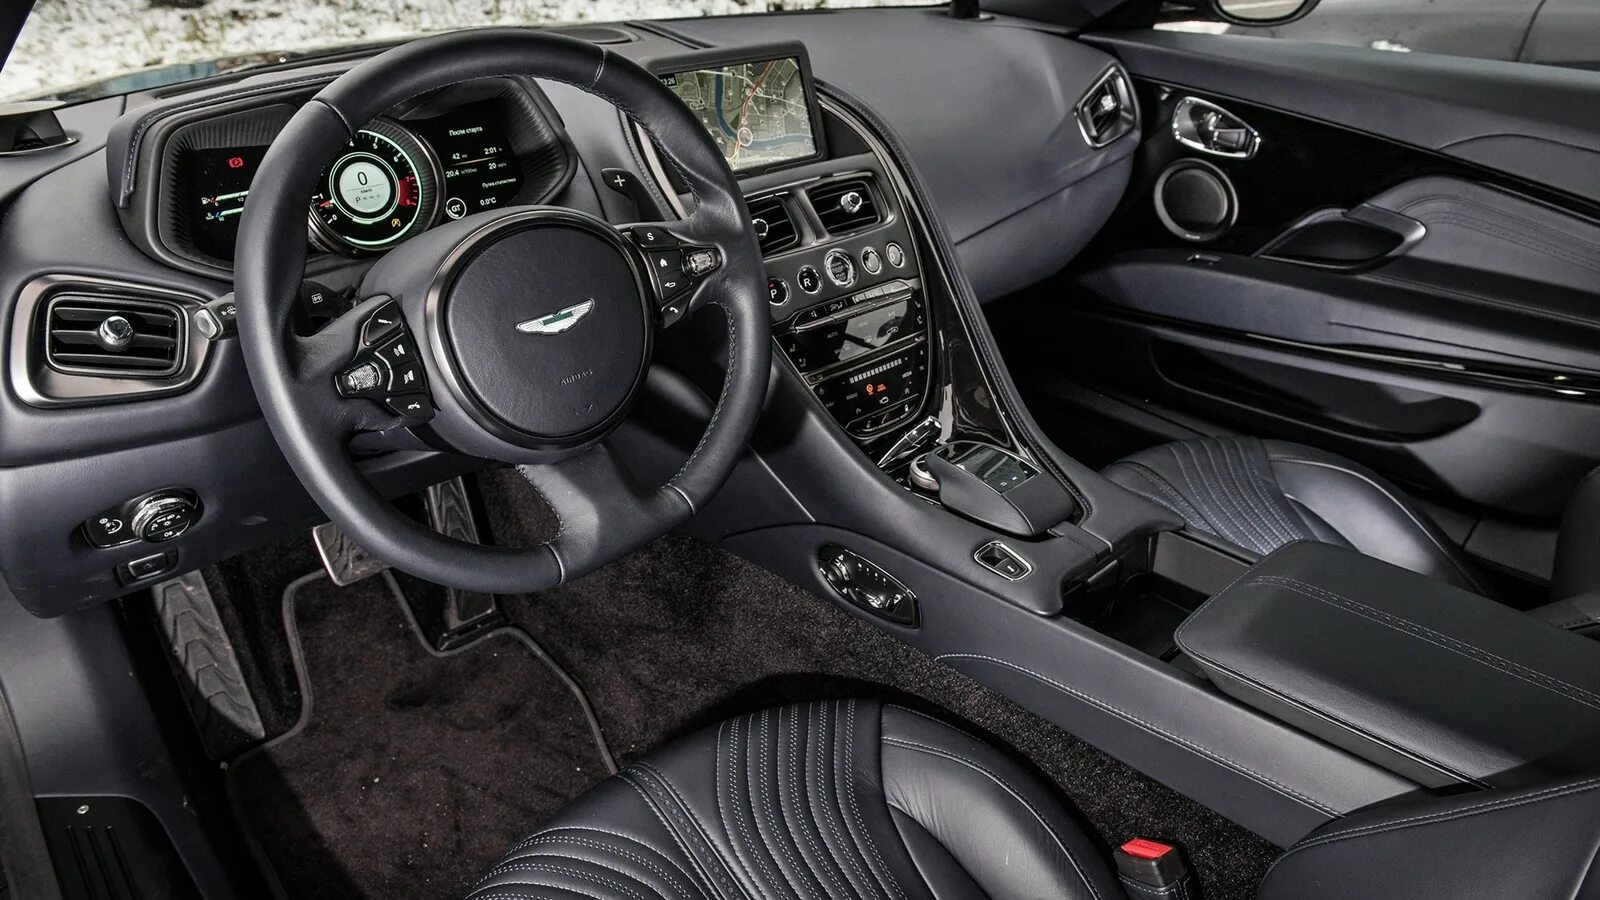 Aston Martin db11 Interior. Aston Martin db11 салон. Aston Martin db10 салон. Aston Martin db10 Interior.